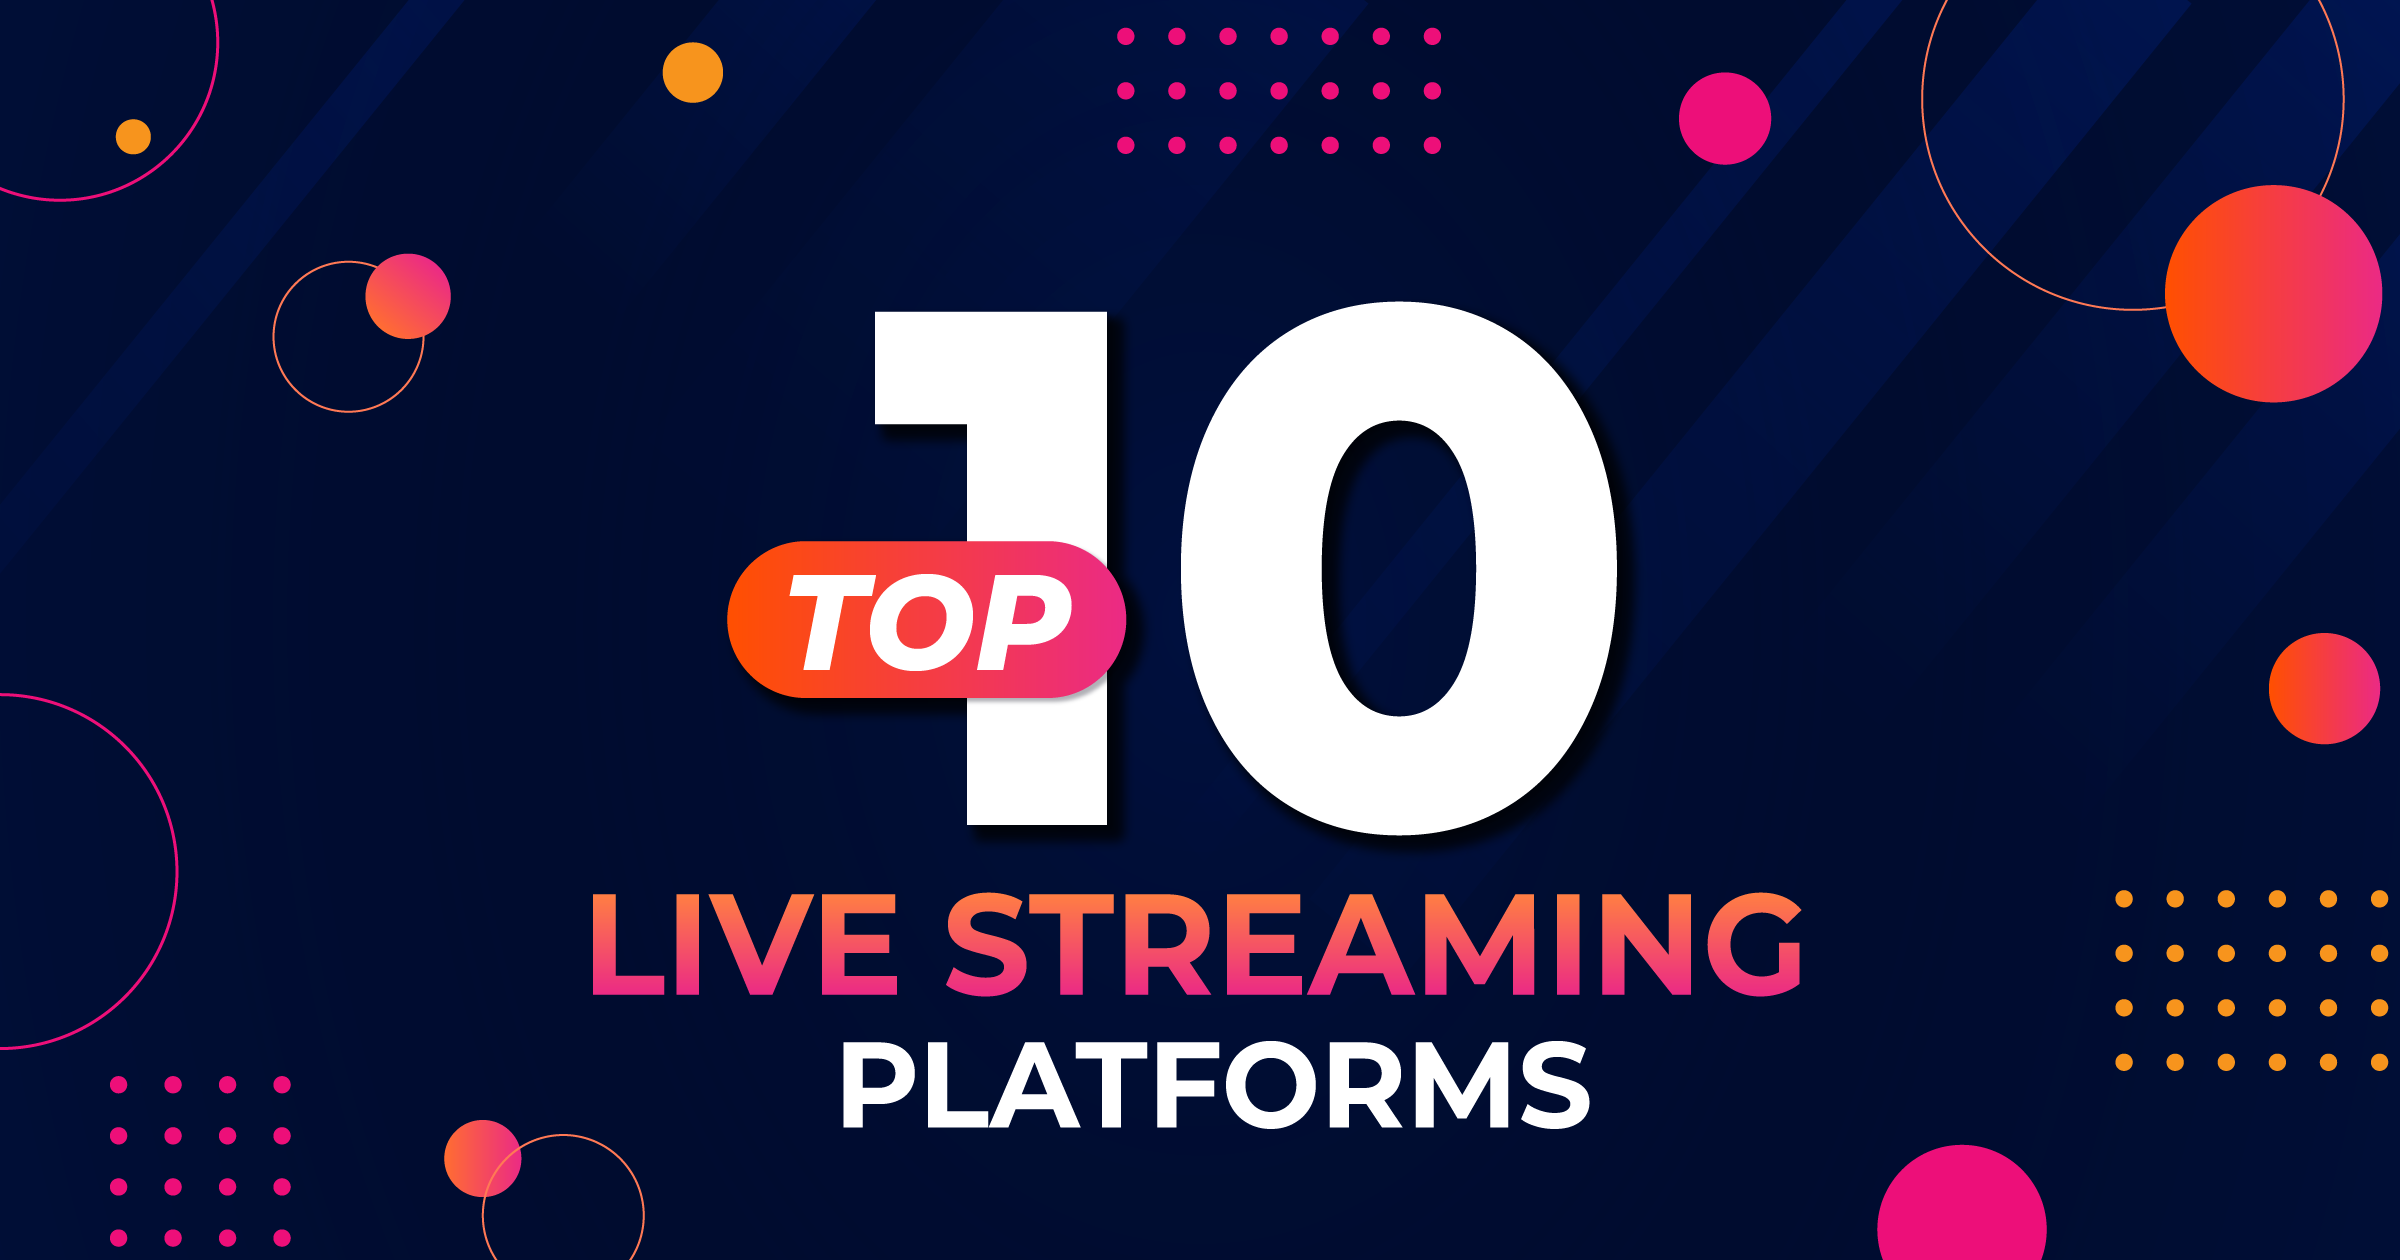 Top 10 live streaming platforms